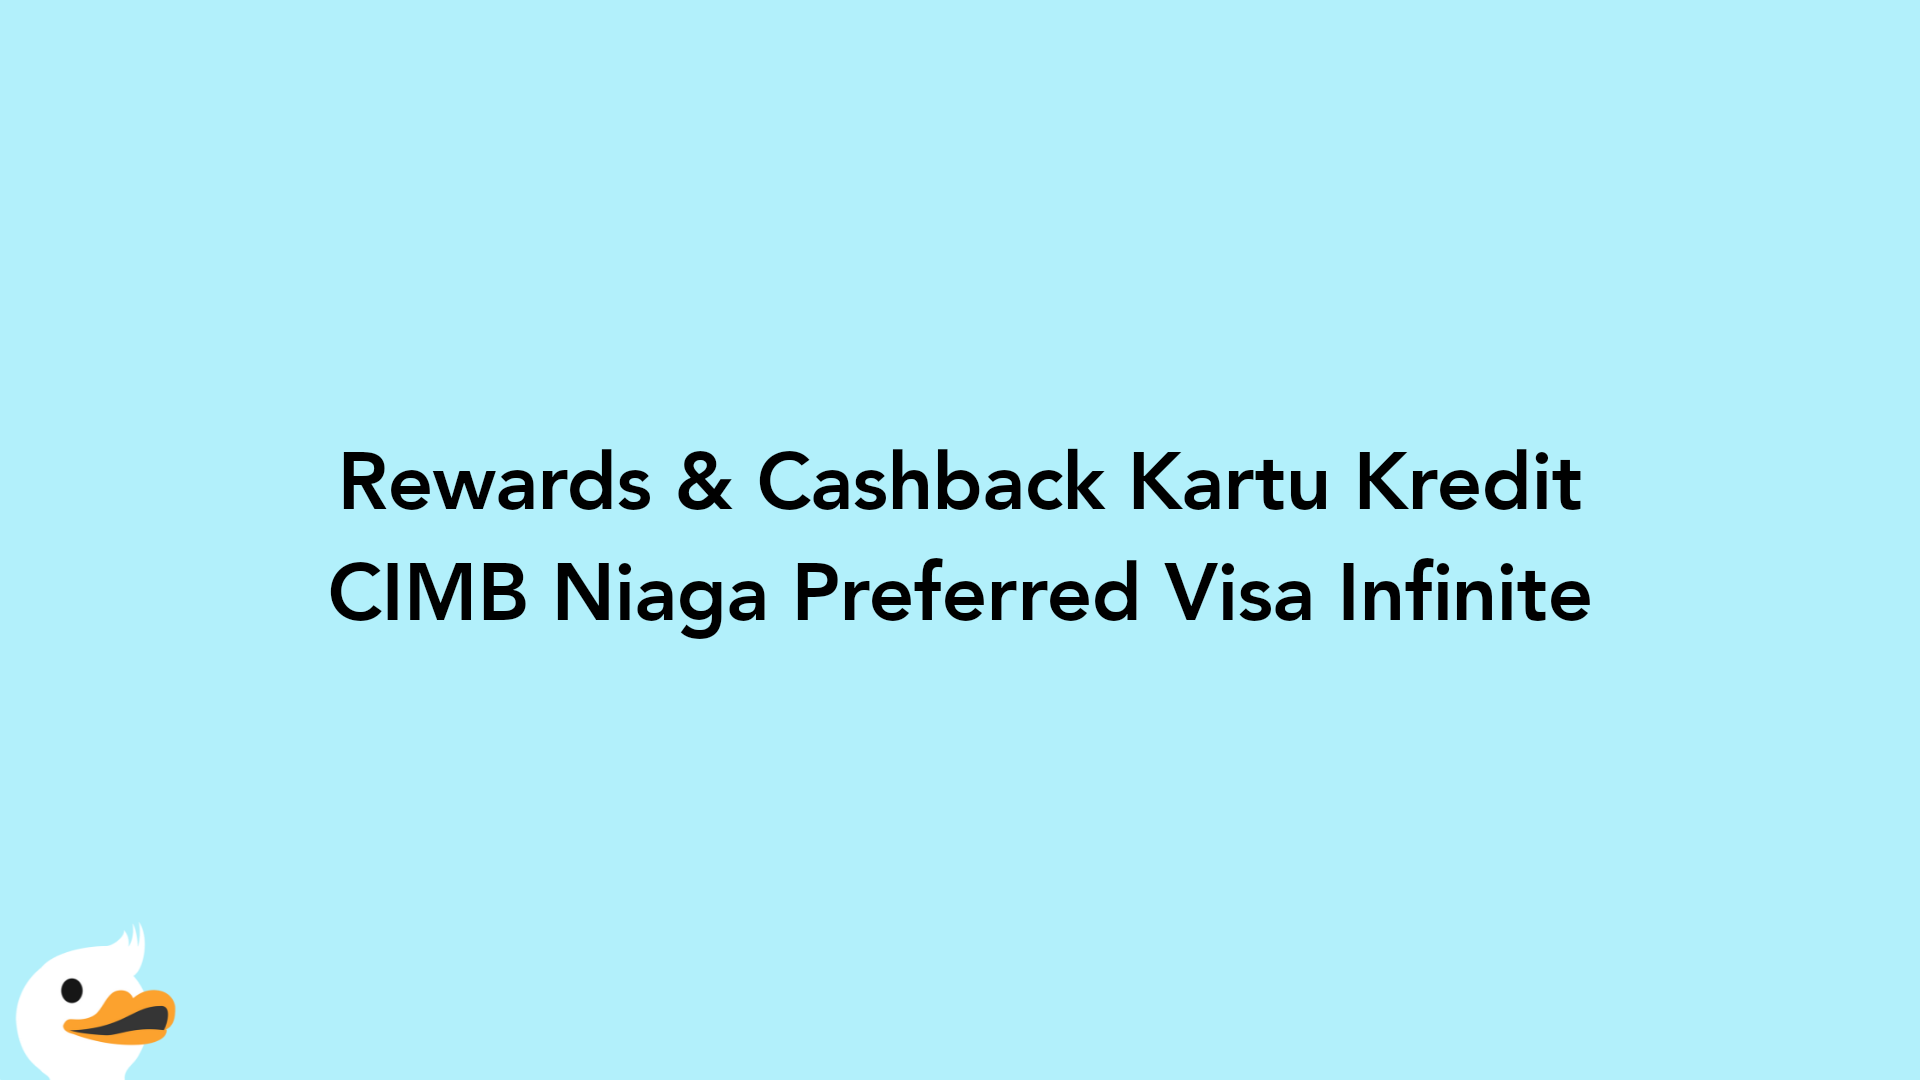 Rewards & Cashback Kartu Kredit CIMB Niaga Preferred Visa Infinite